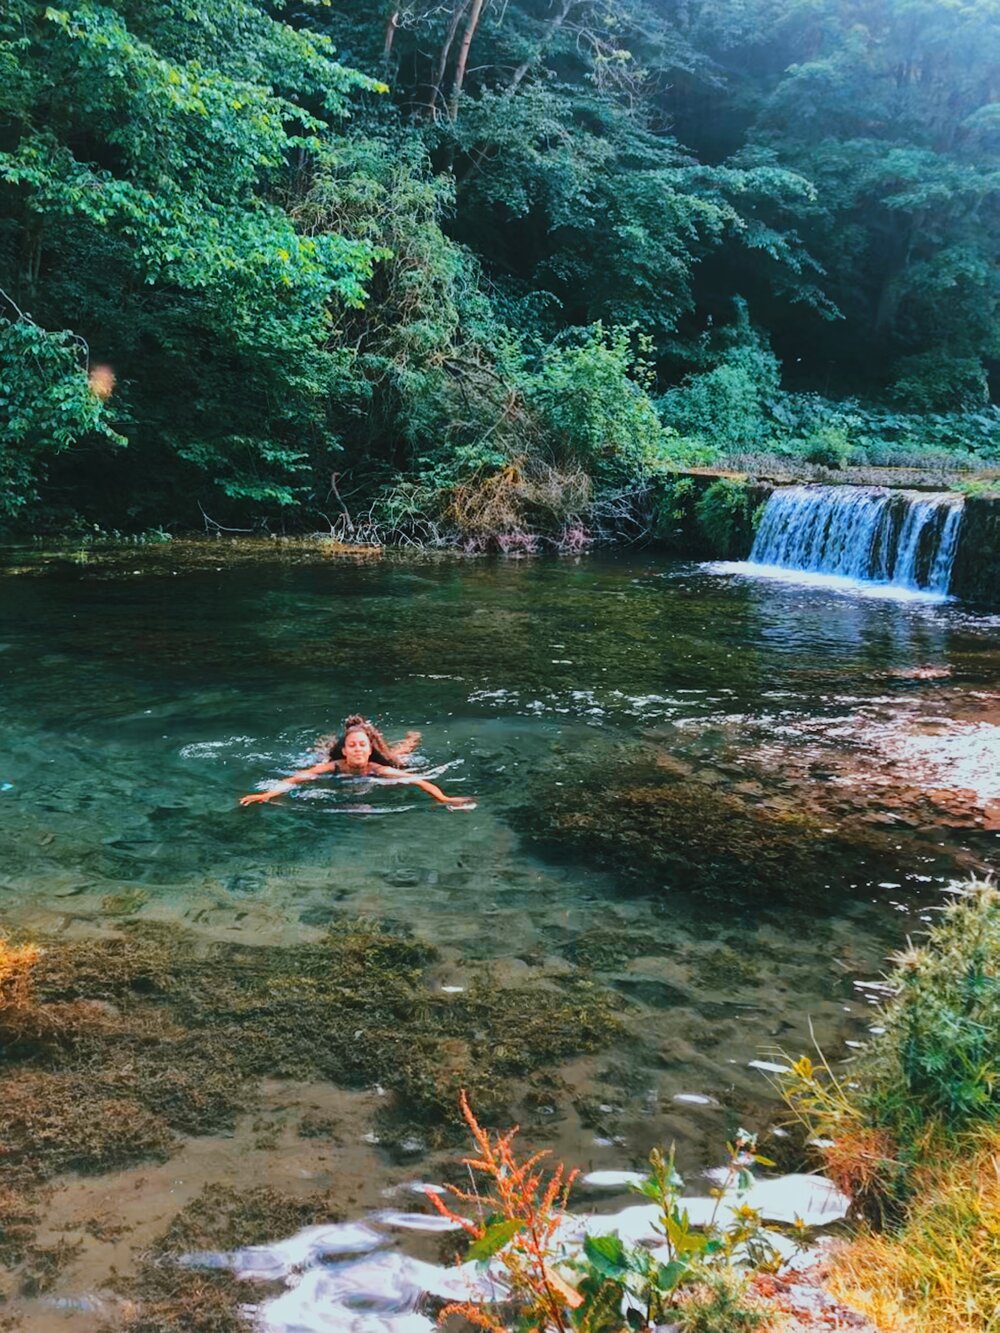 Evie having a swim in a beautiful clear river. Photo: Evie Muir